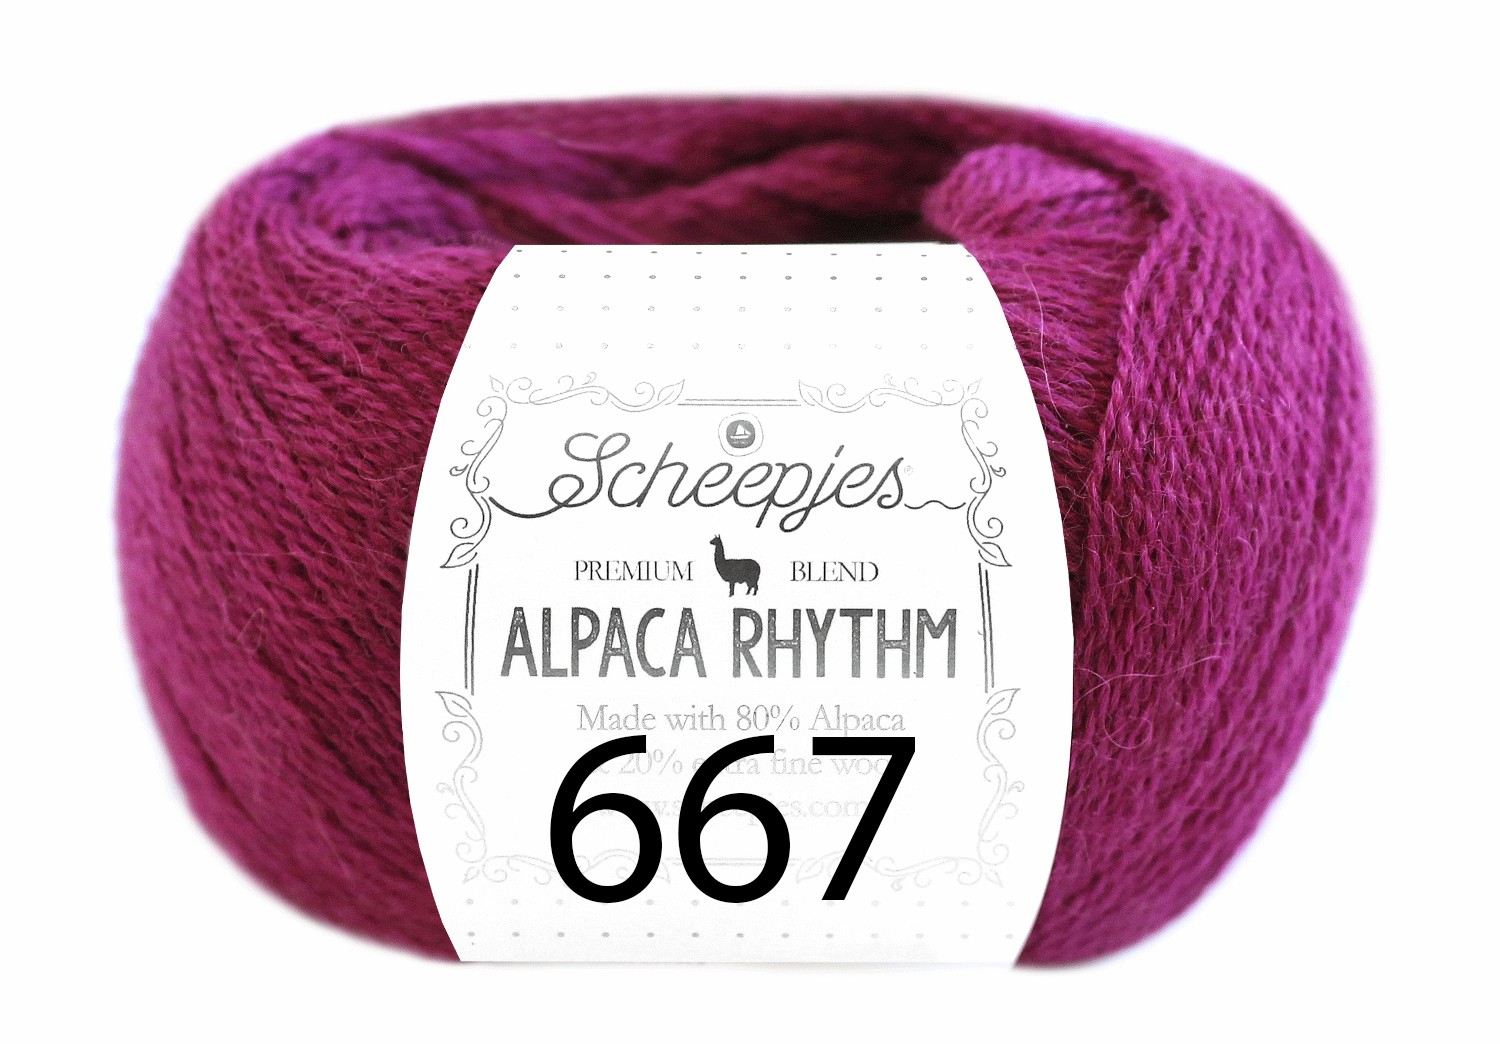 Scheepjes- Alpaca Rhythm 667 Jitterbug